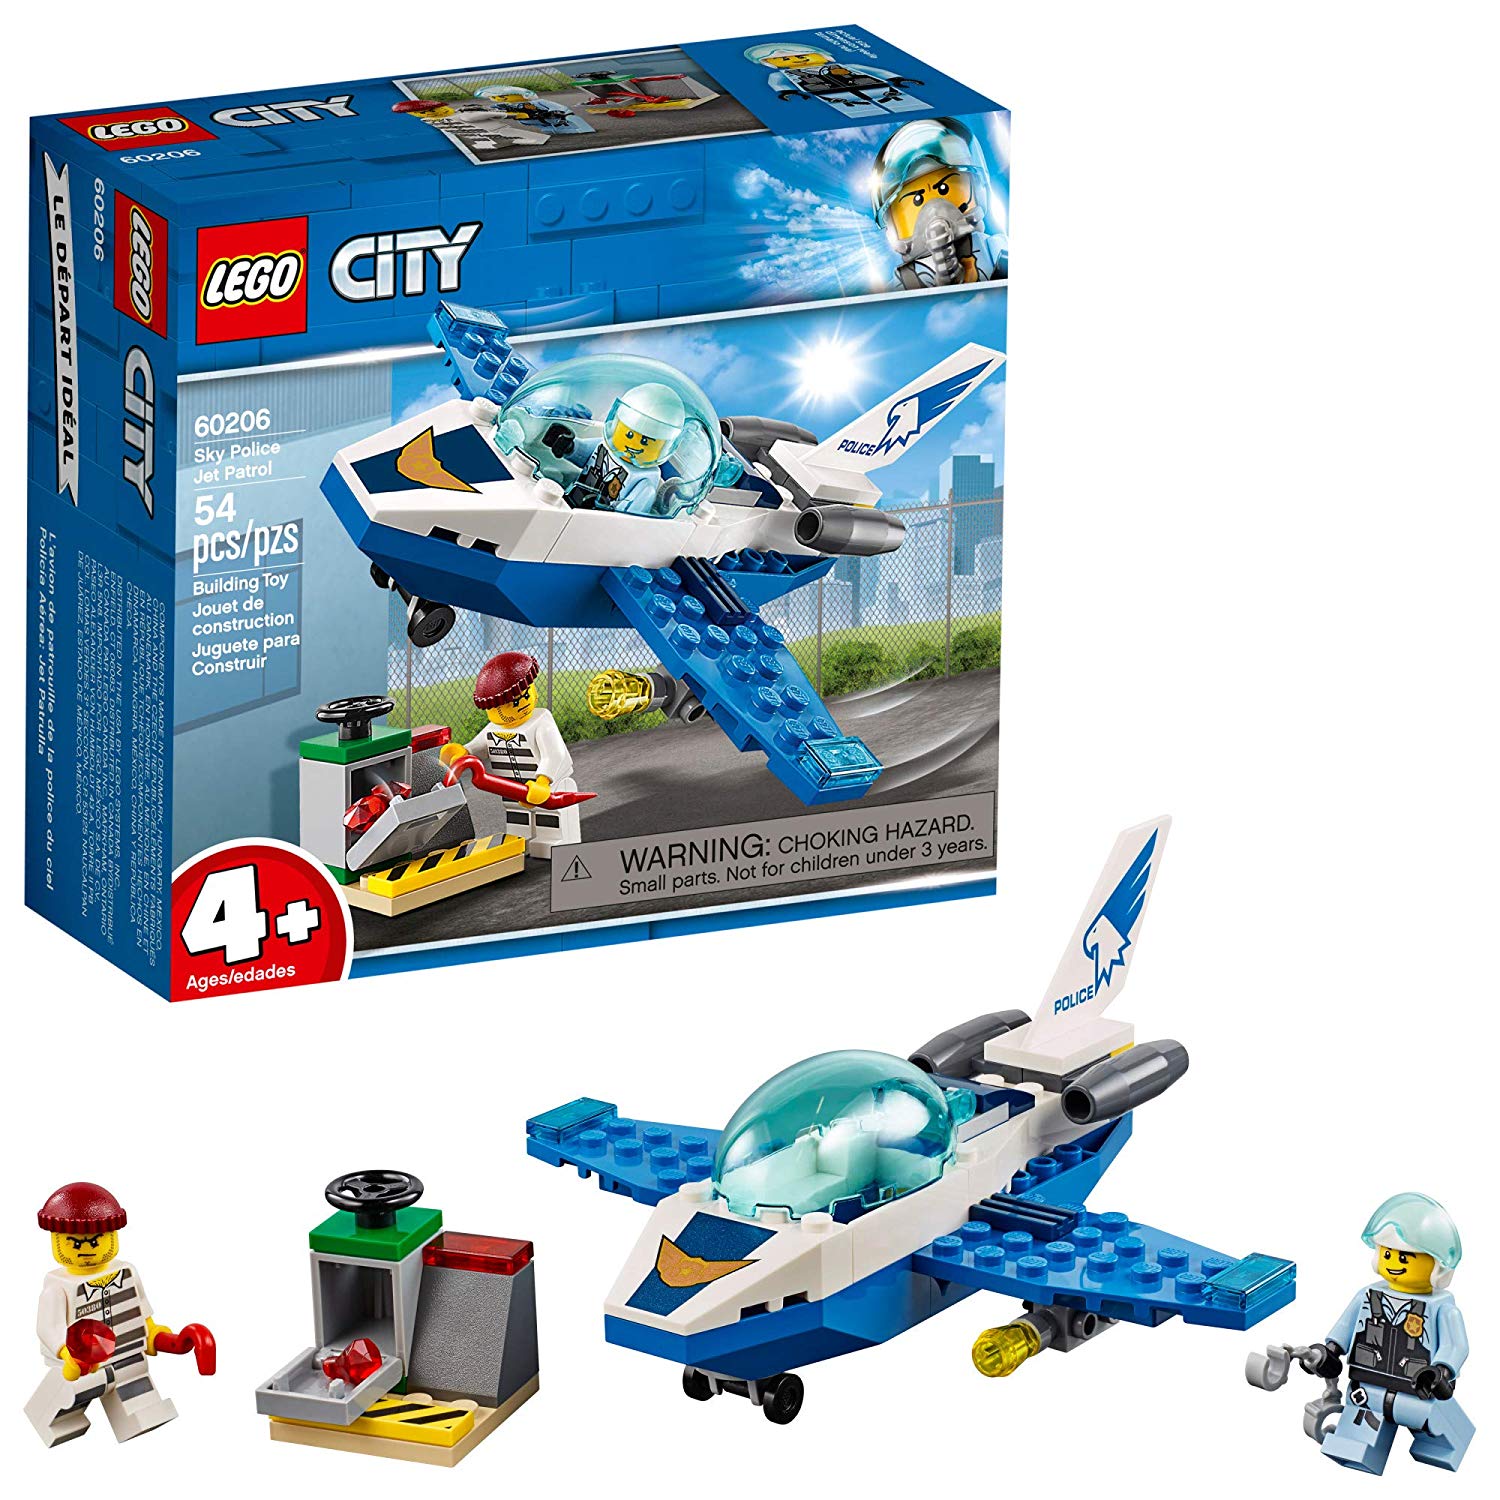 City Lego 4+ Sky Police Jet Patrol 60206 Construction Kit New 2019 (54 Piec